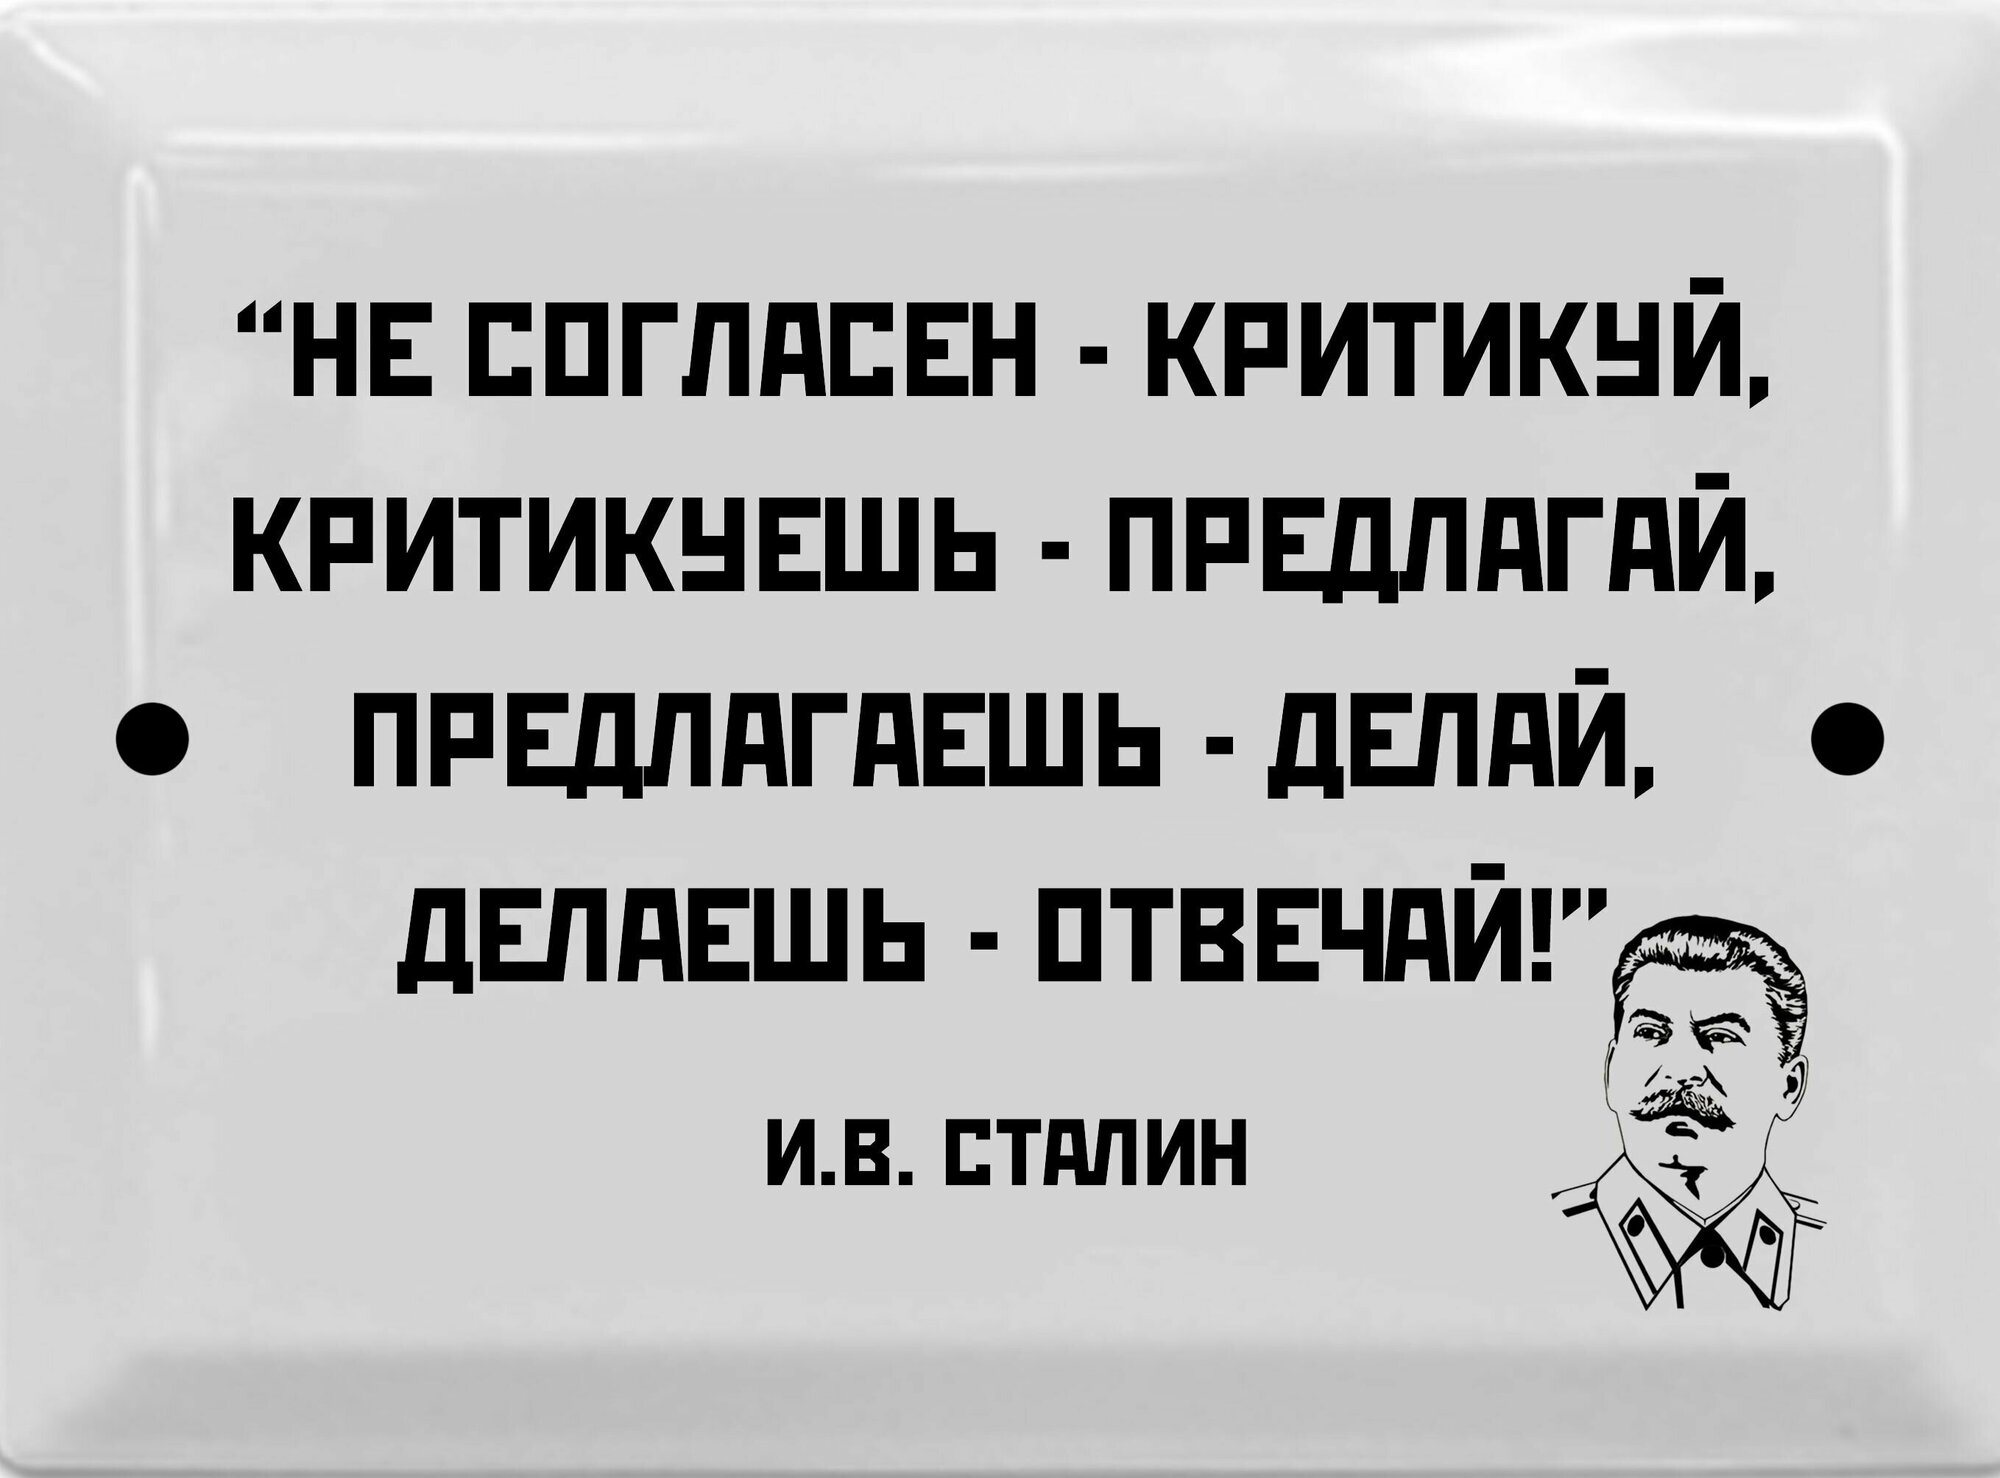 Табличка в стиле времен СССР 17х23 см. "Не согласен- критикуй"